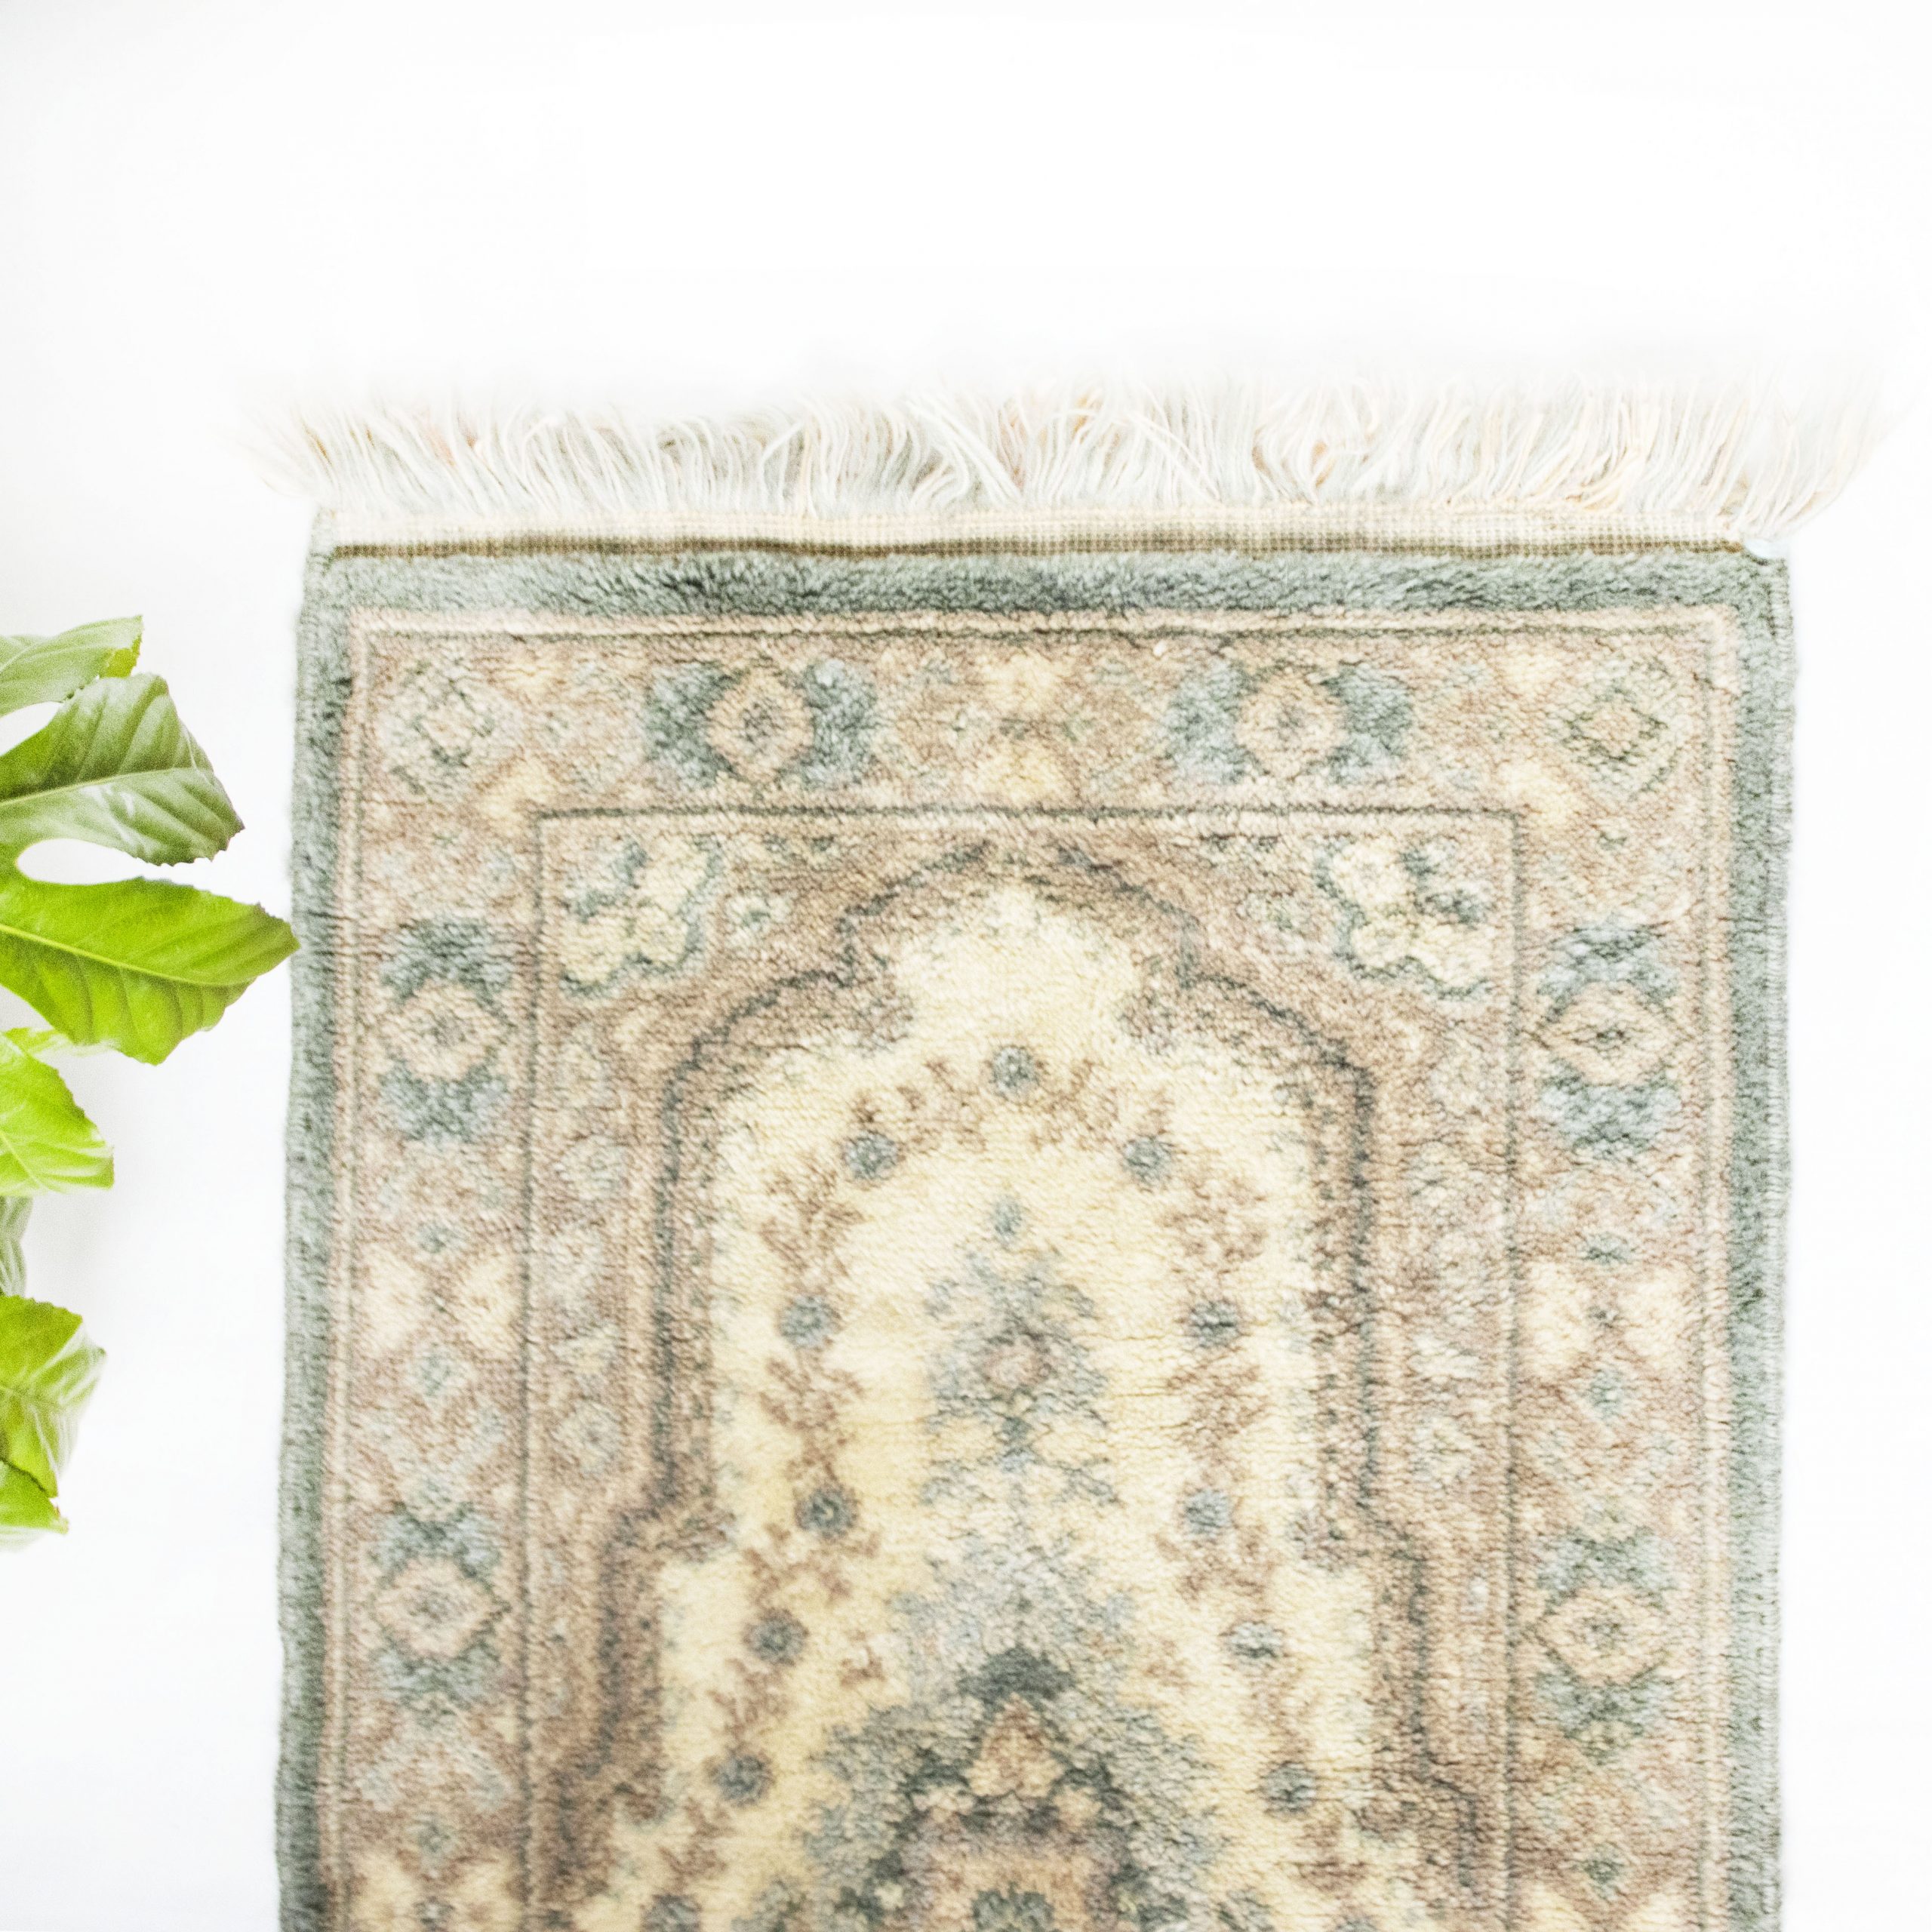 Kudde Anzai spanning Vintage tapijt/deurmat mint - End of April - End of April